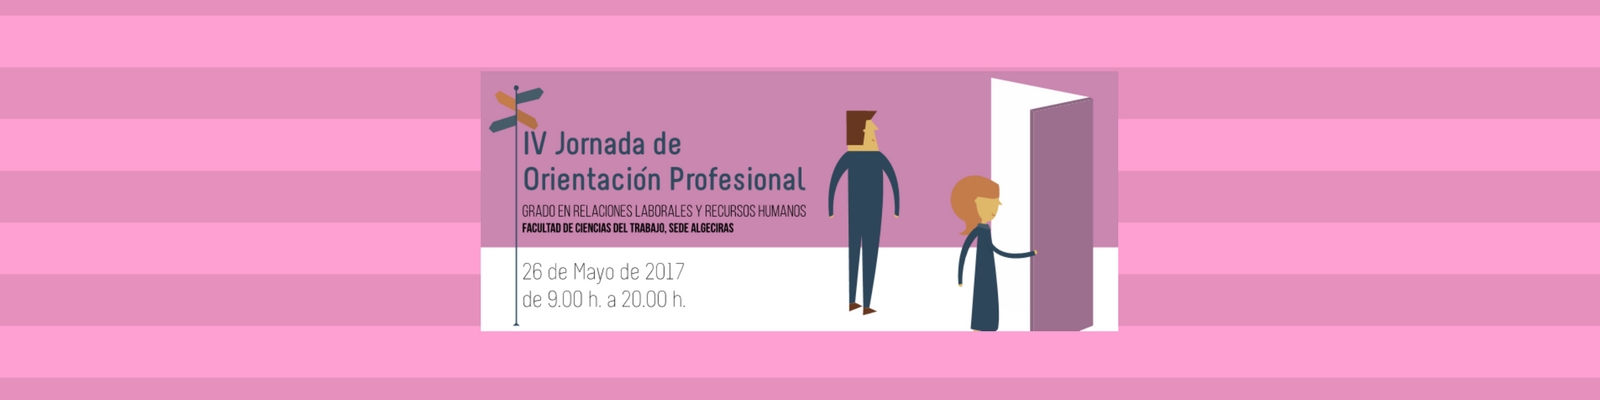 IV Jornada de Orientación Profesional en Algeciras